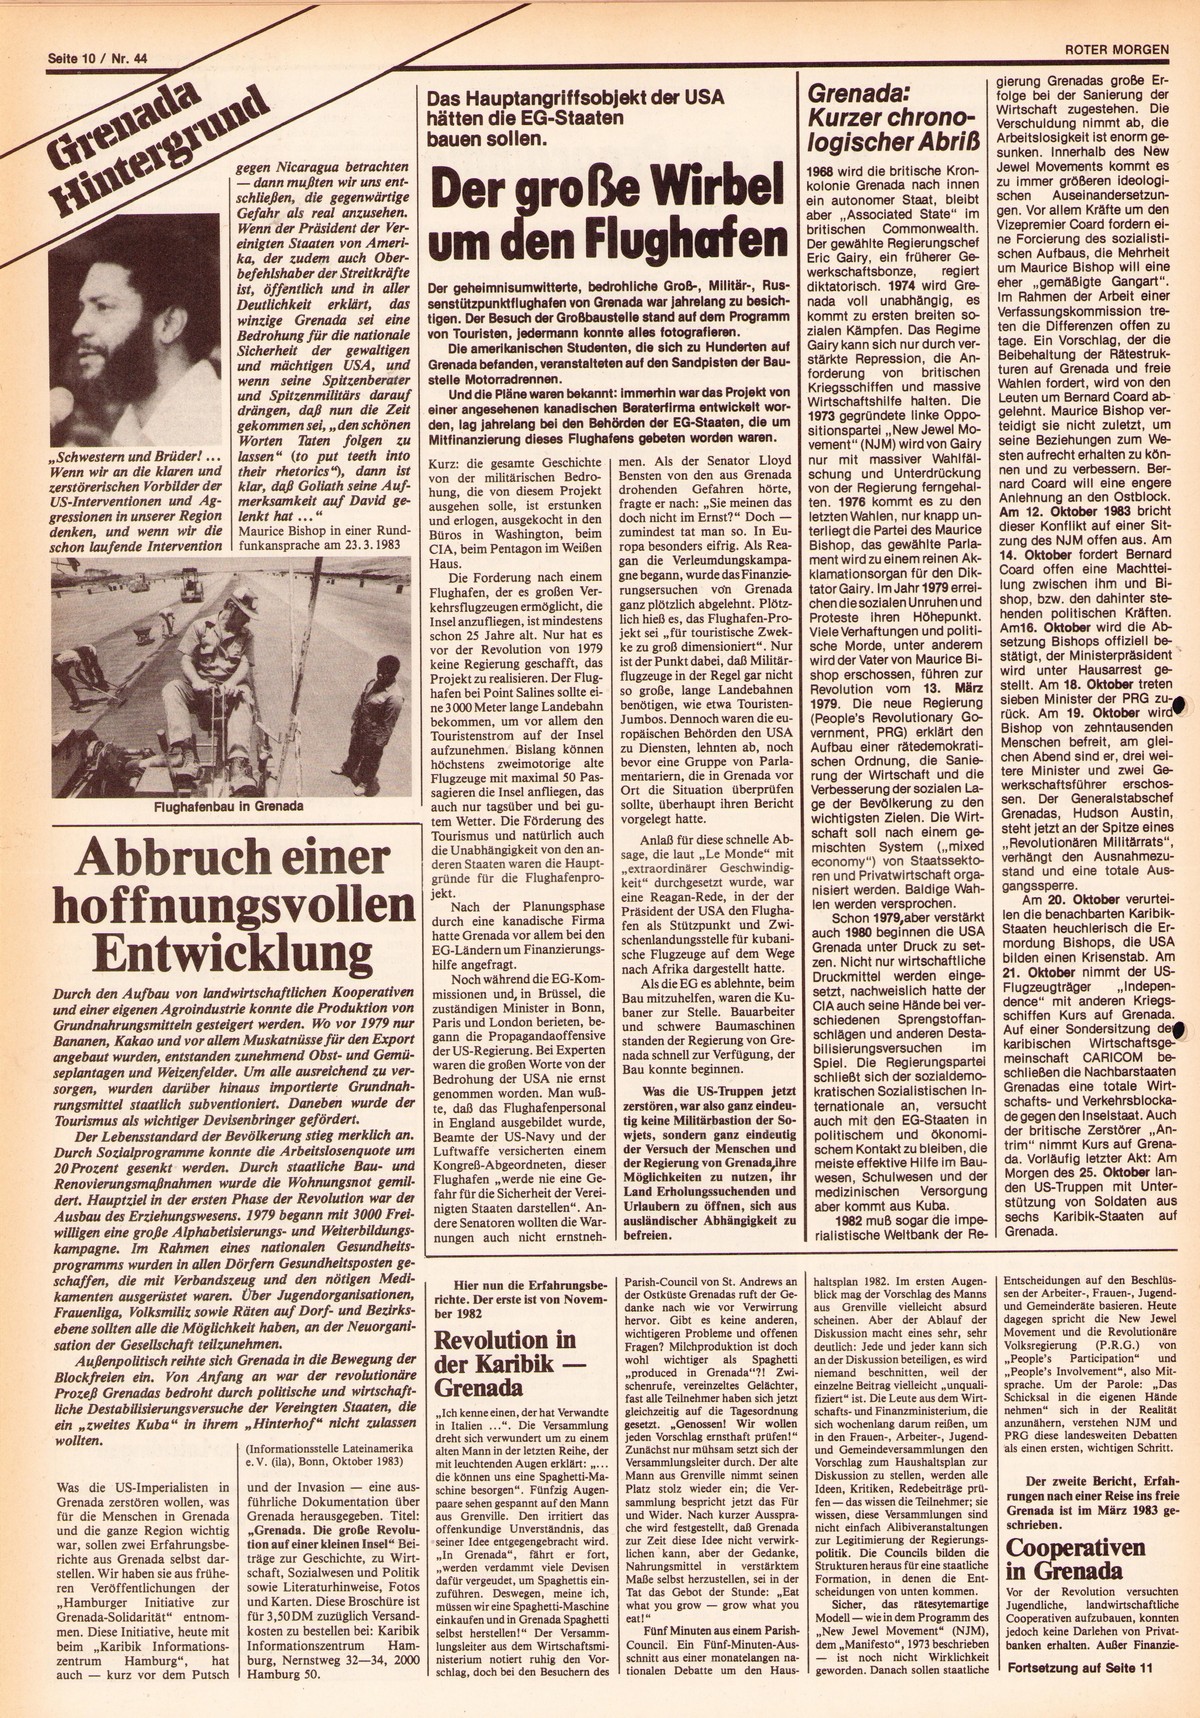 Roter Morgen, 17. Jg., 4. November 1983, Nr. 44, Seite 10